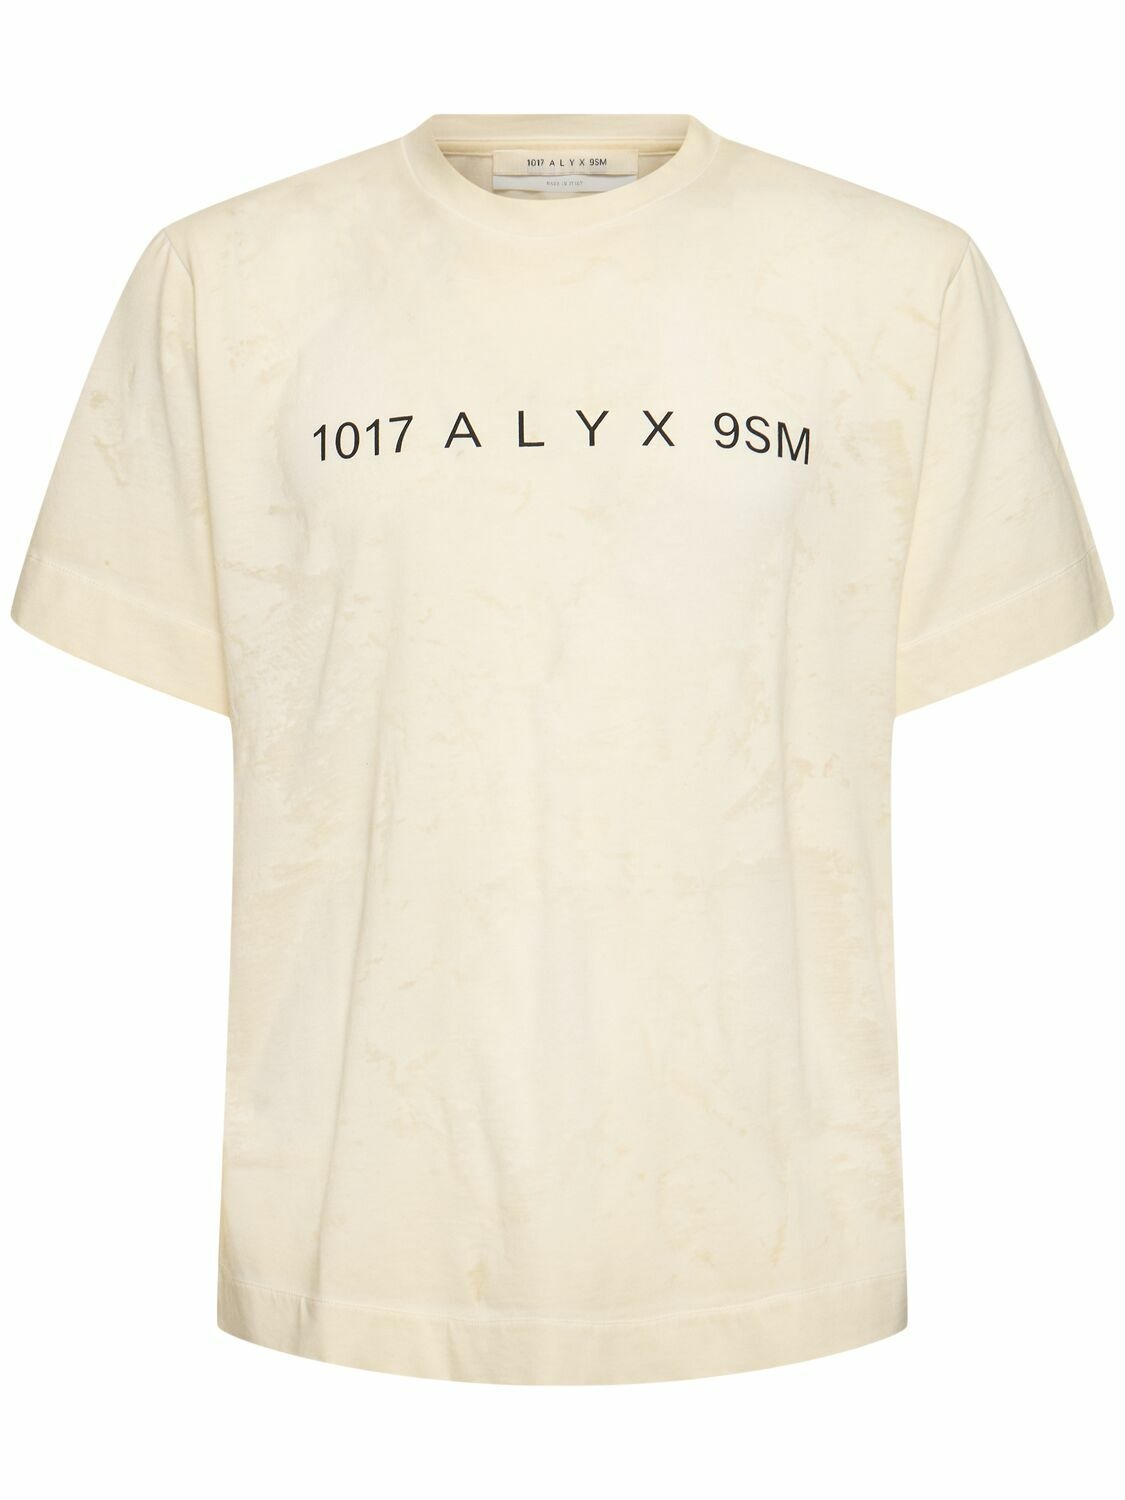 Photo: 1017 ALYX 9SM - Logo Print Translucent S/s T-shirt